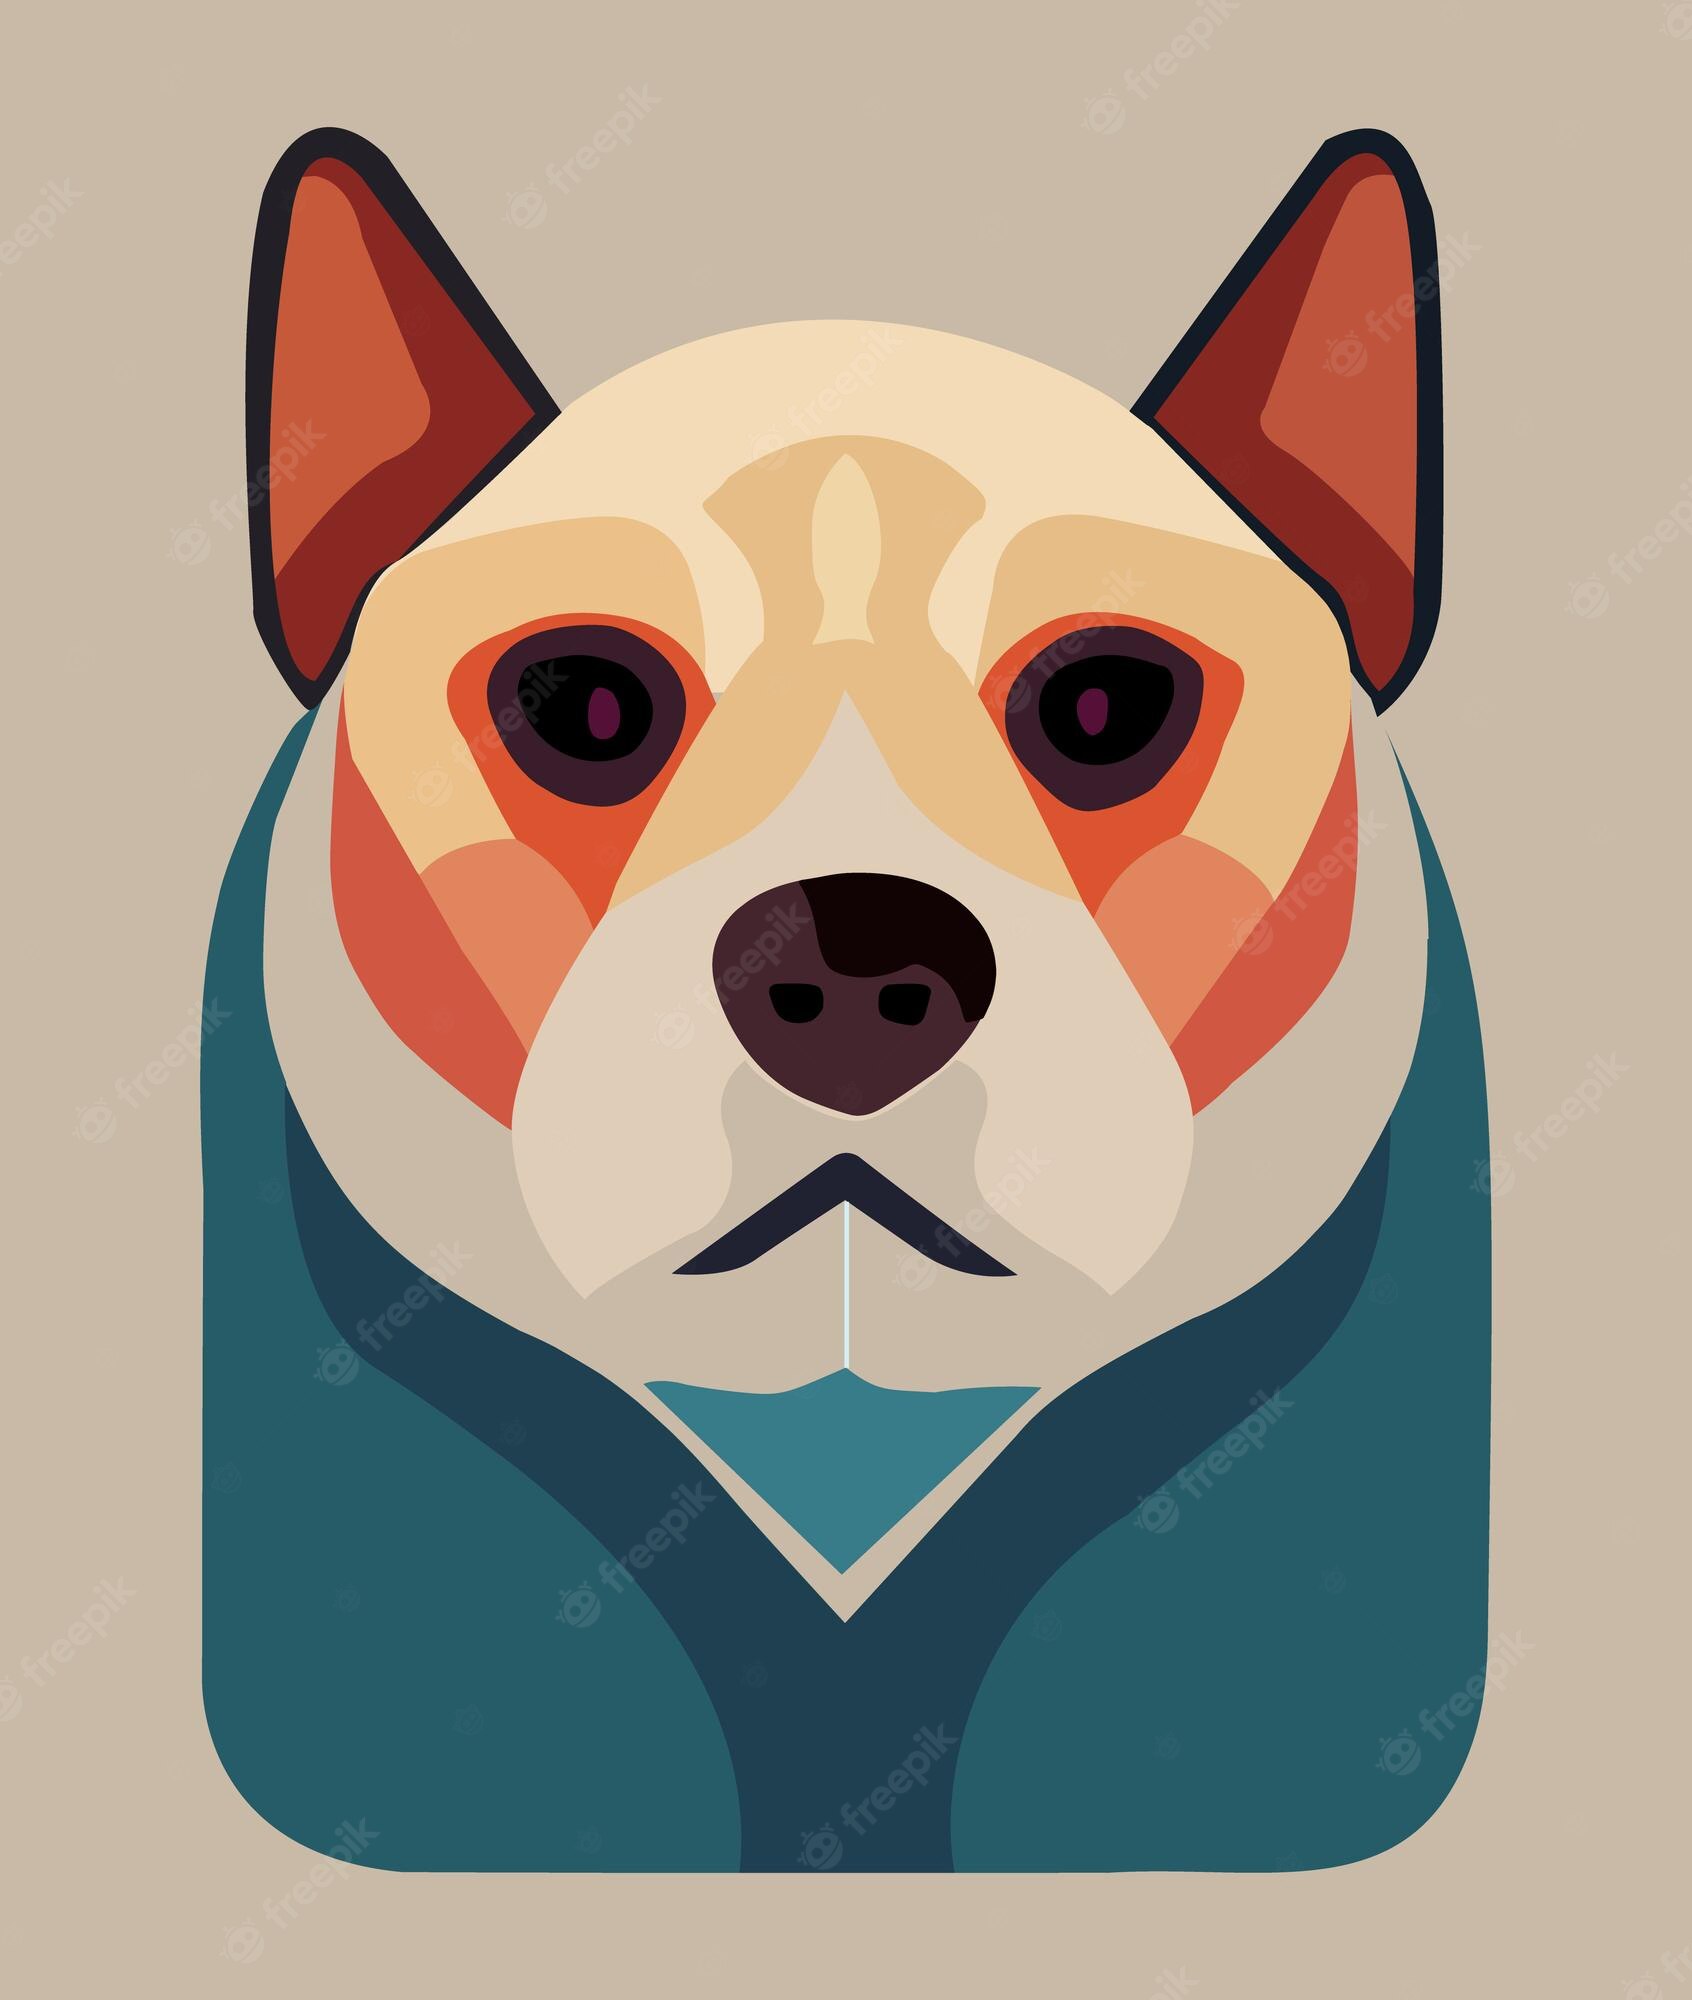 Premium Vector. Portrait of a cartoon style dog. flat design cute dog drawing. poster, sticker, wallpaper design